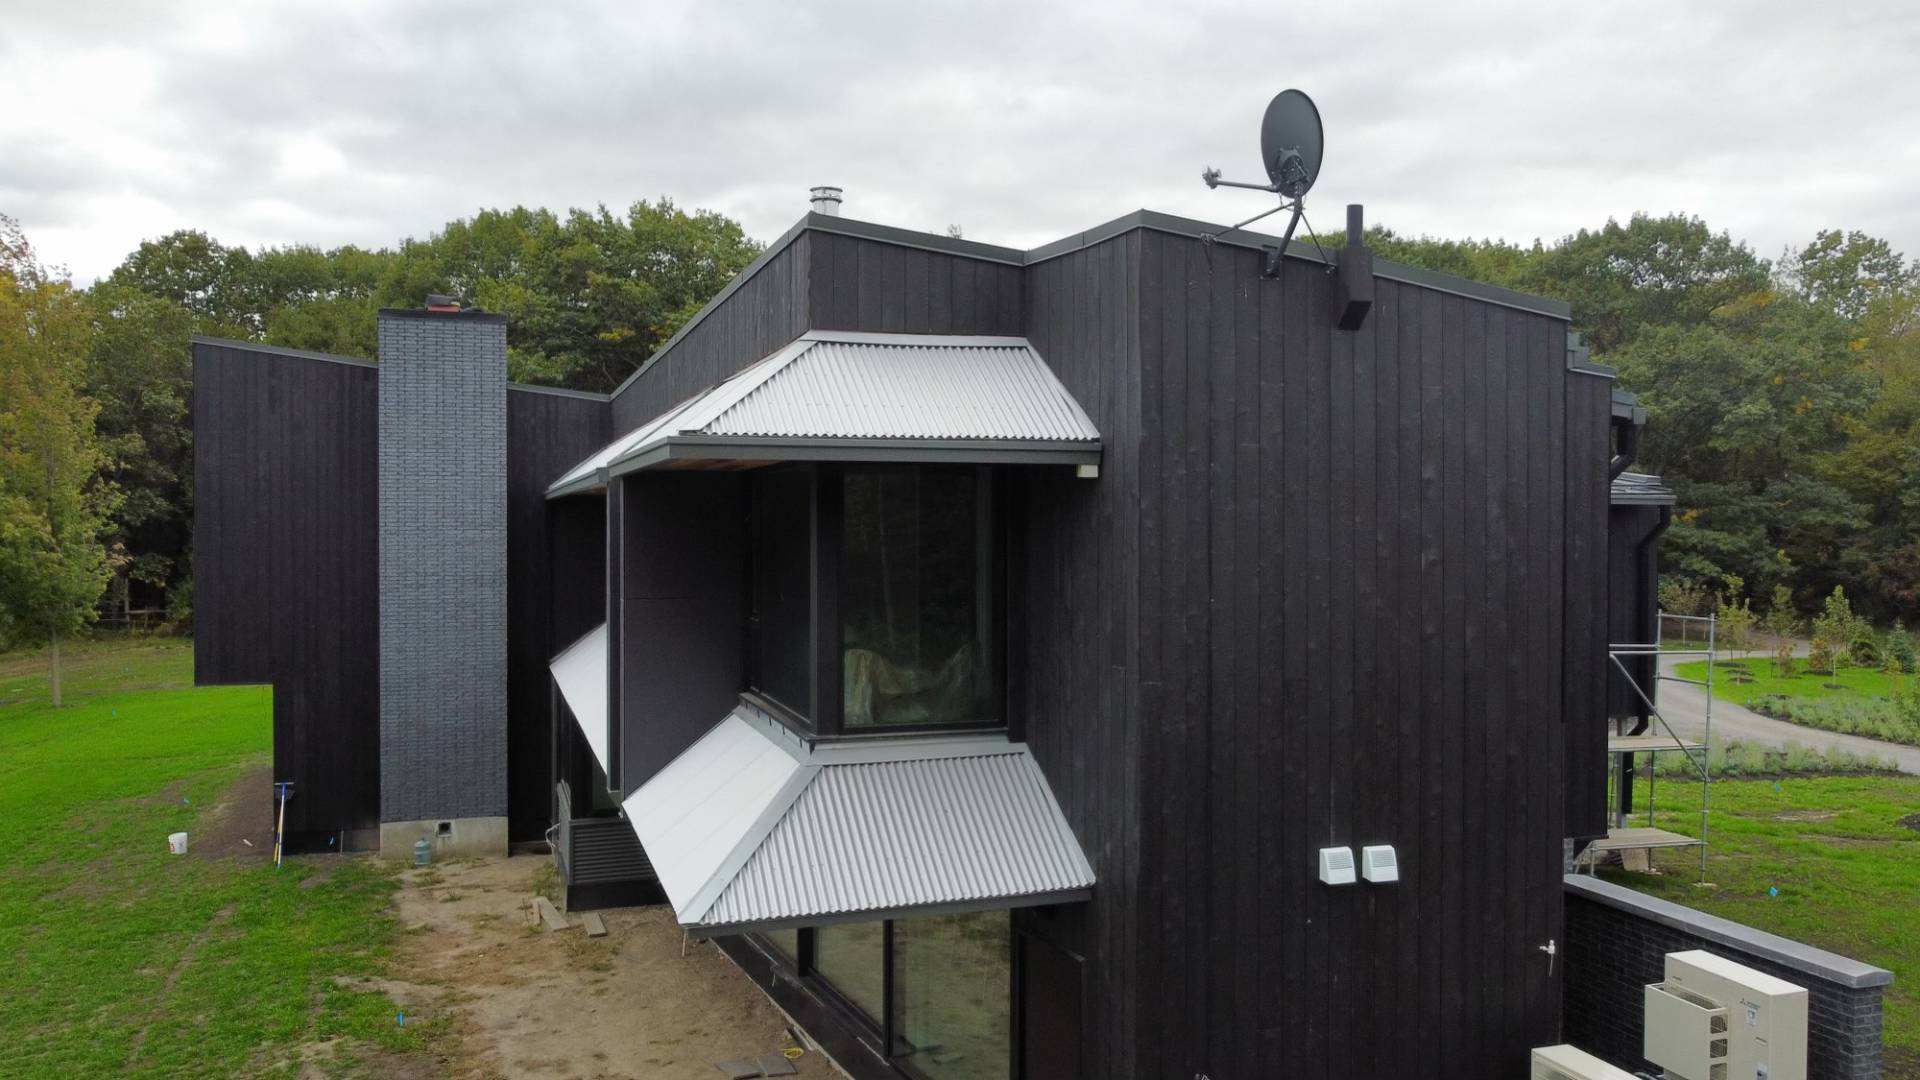 7/8” Corrugated Siding installation on skirt roof